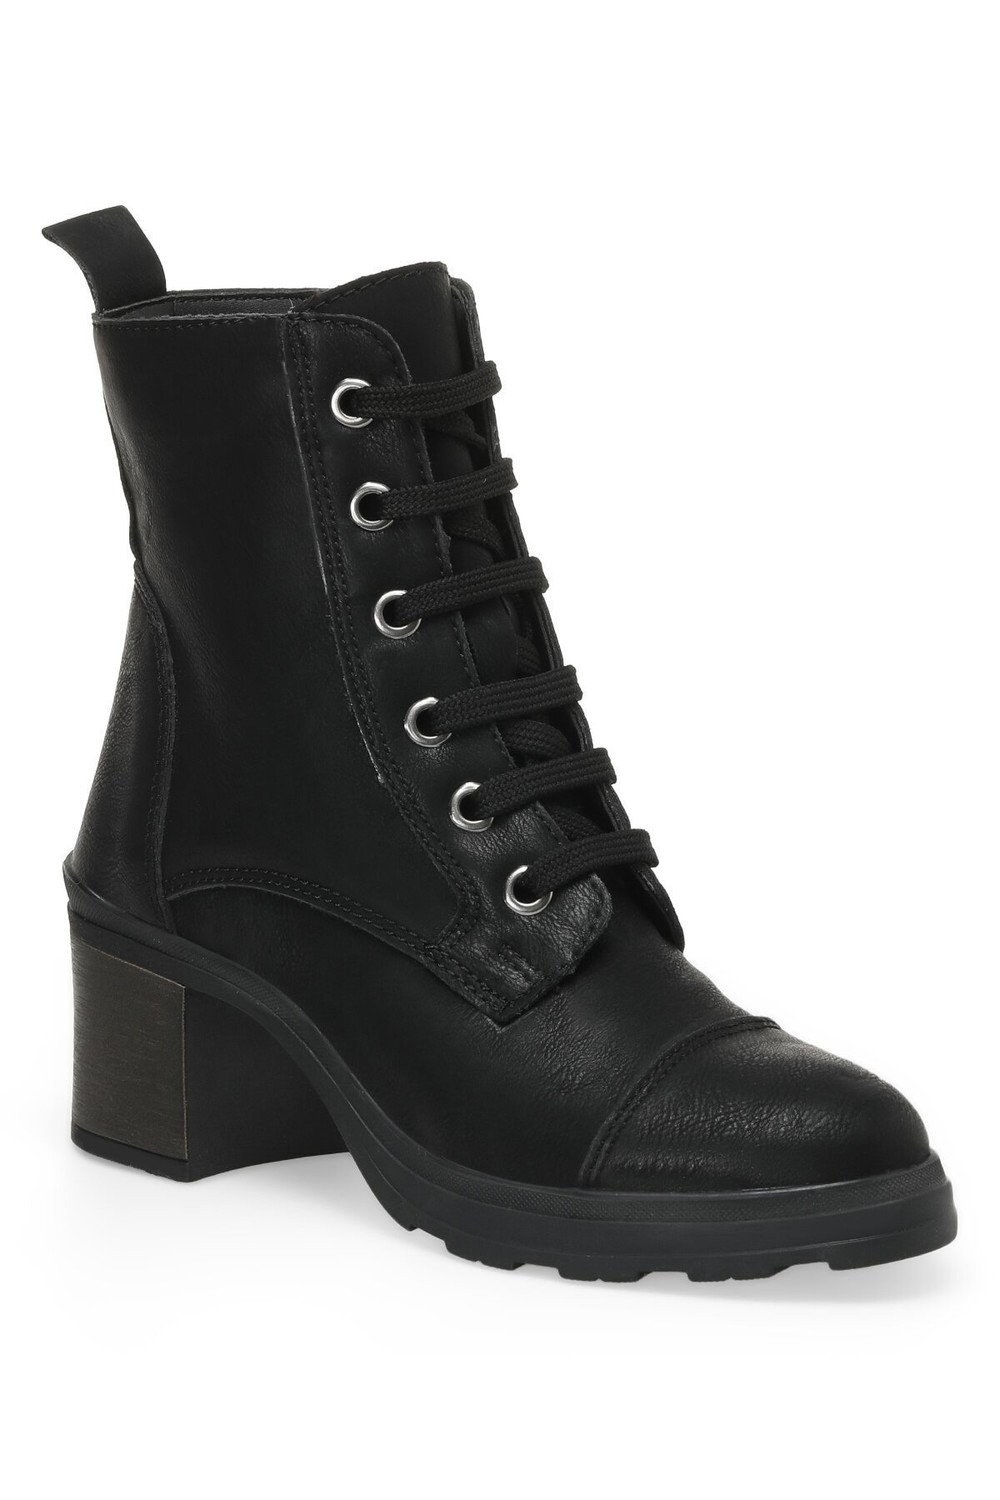 Polaris 32020144.z 2pr Women's Black Heeled Boots.